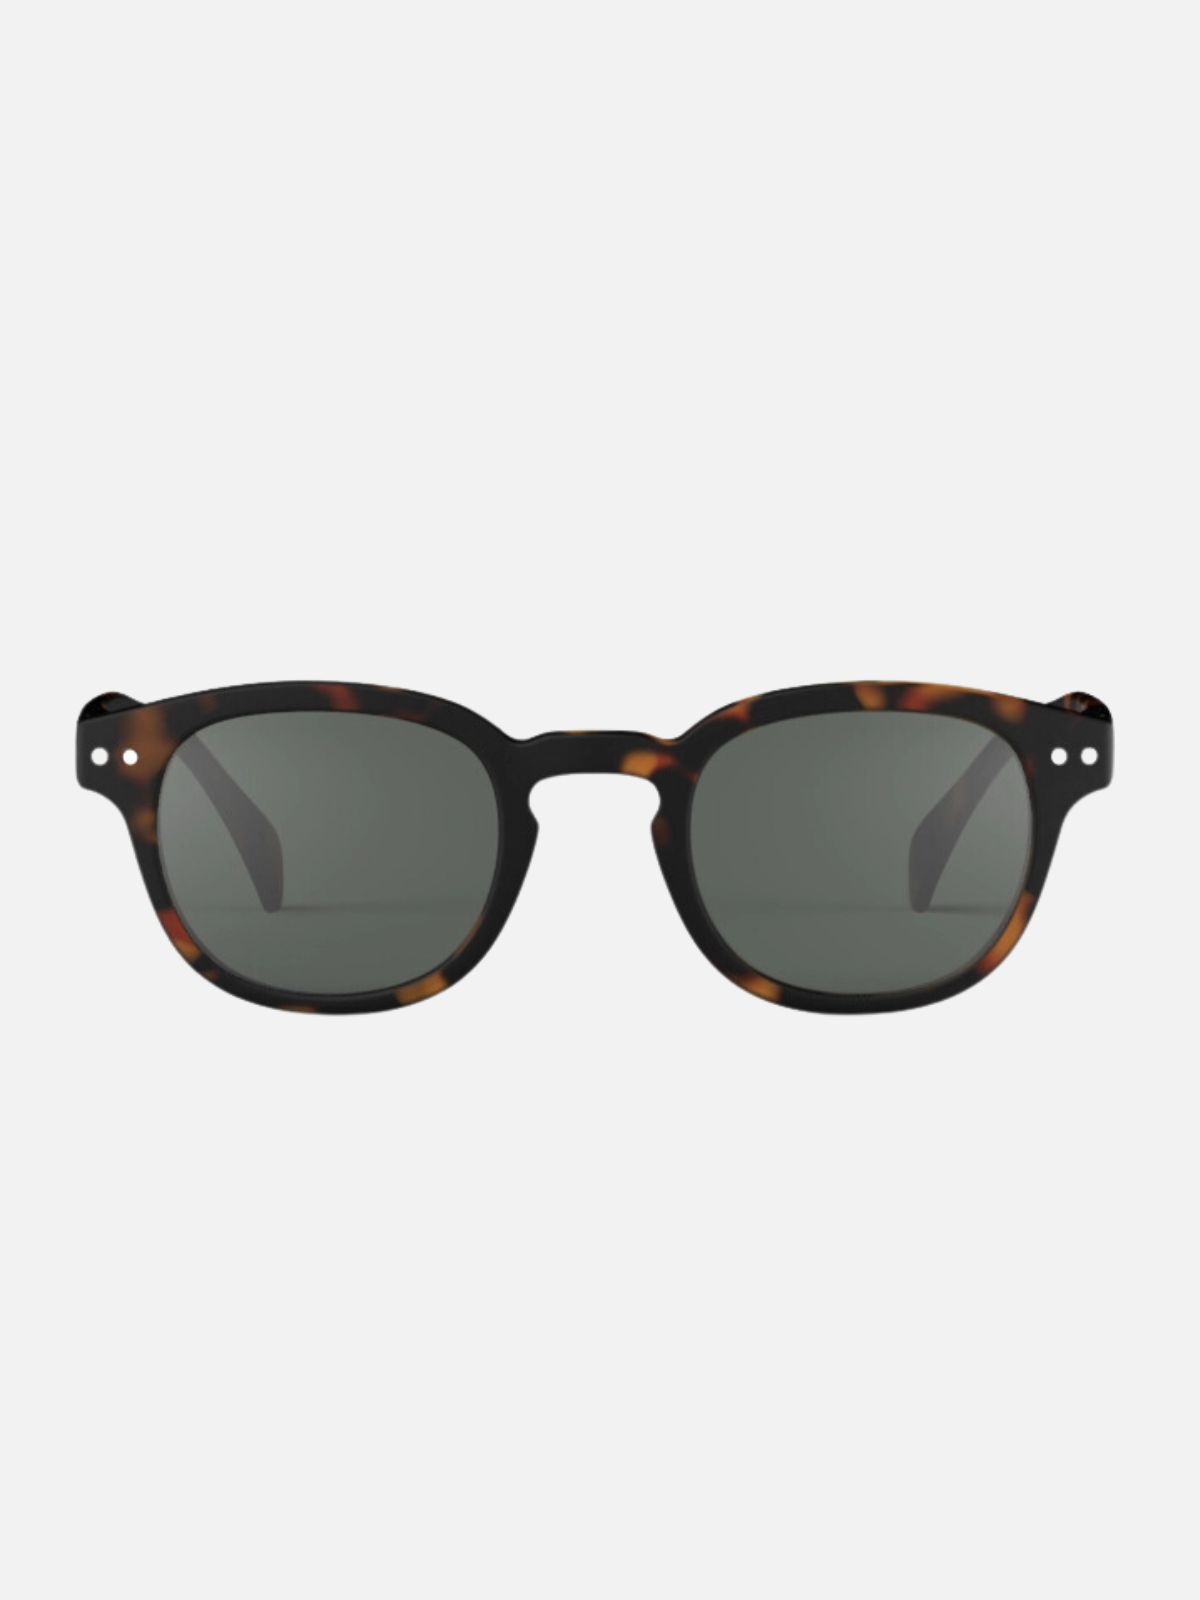 izipizi retro #C sunglasses round shape smaller frame rubberized frames flex hinges kempt athens ga georgia men's clothing store